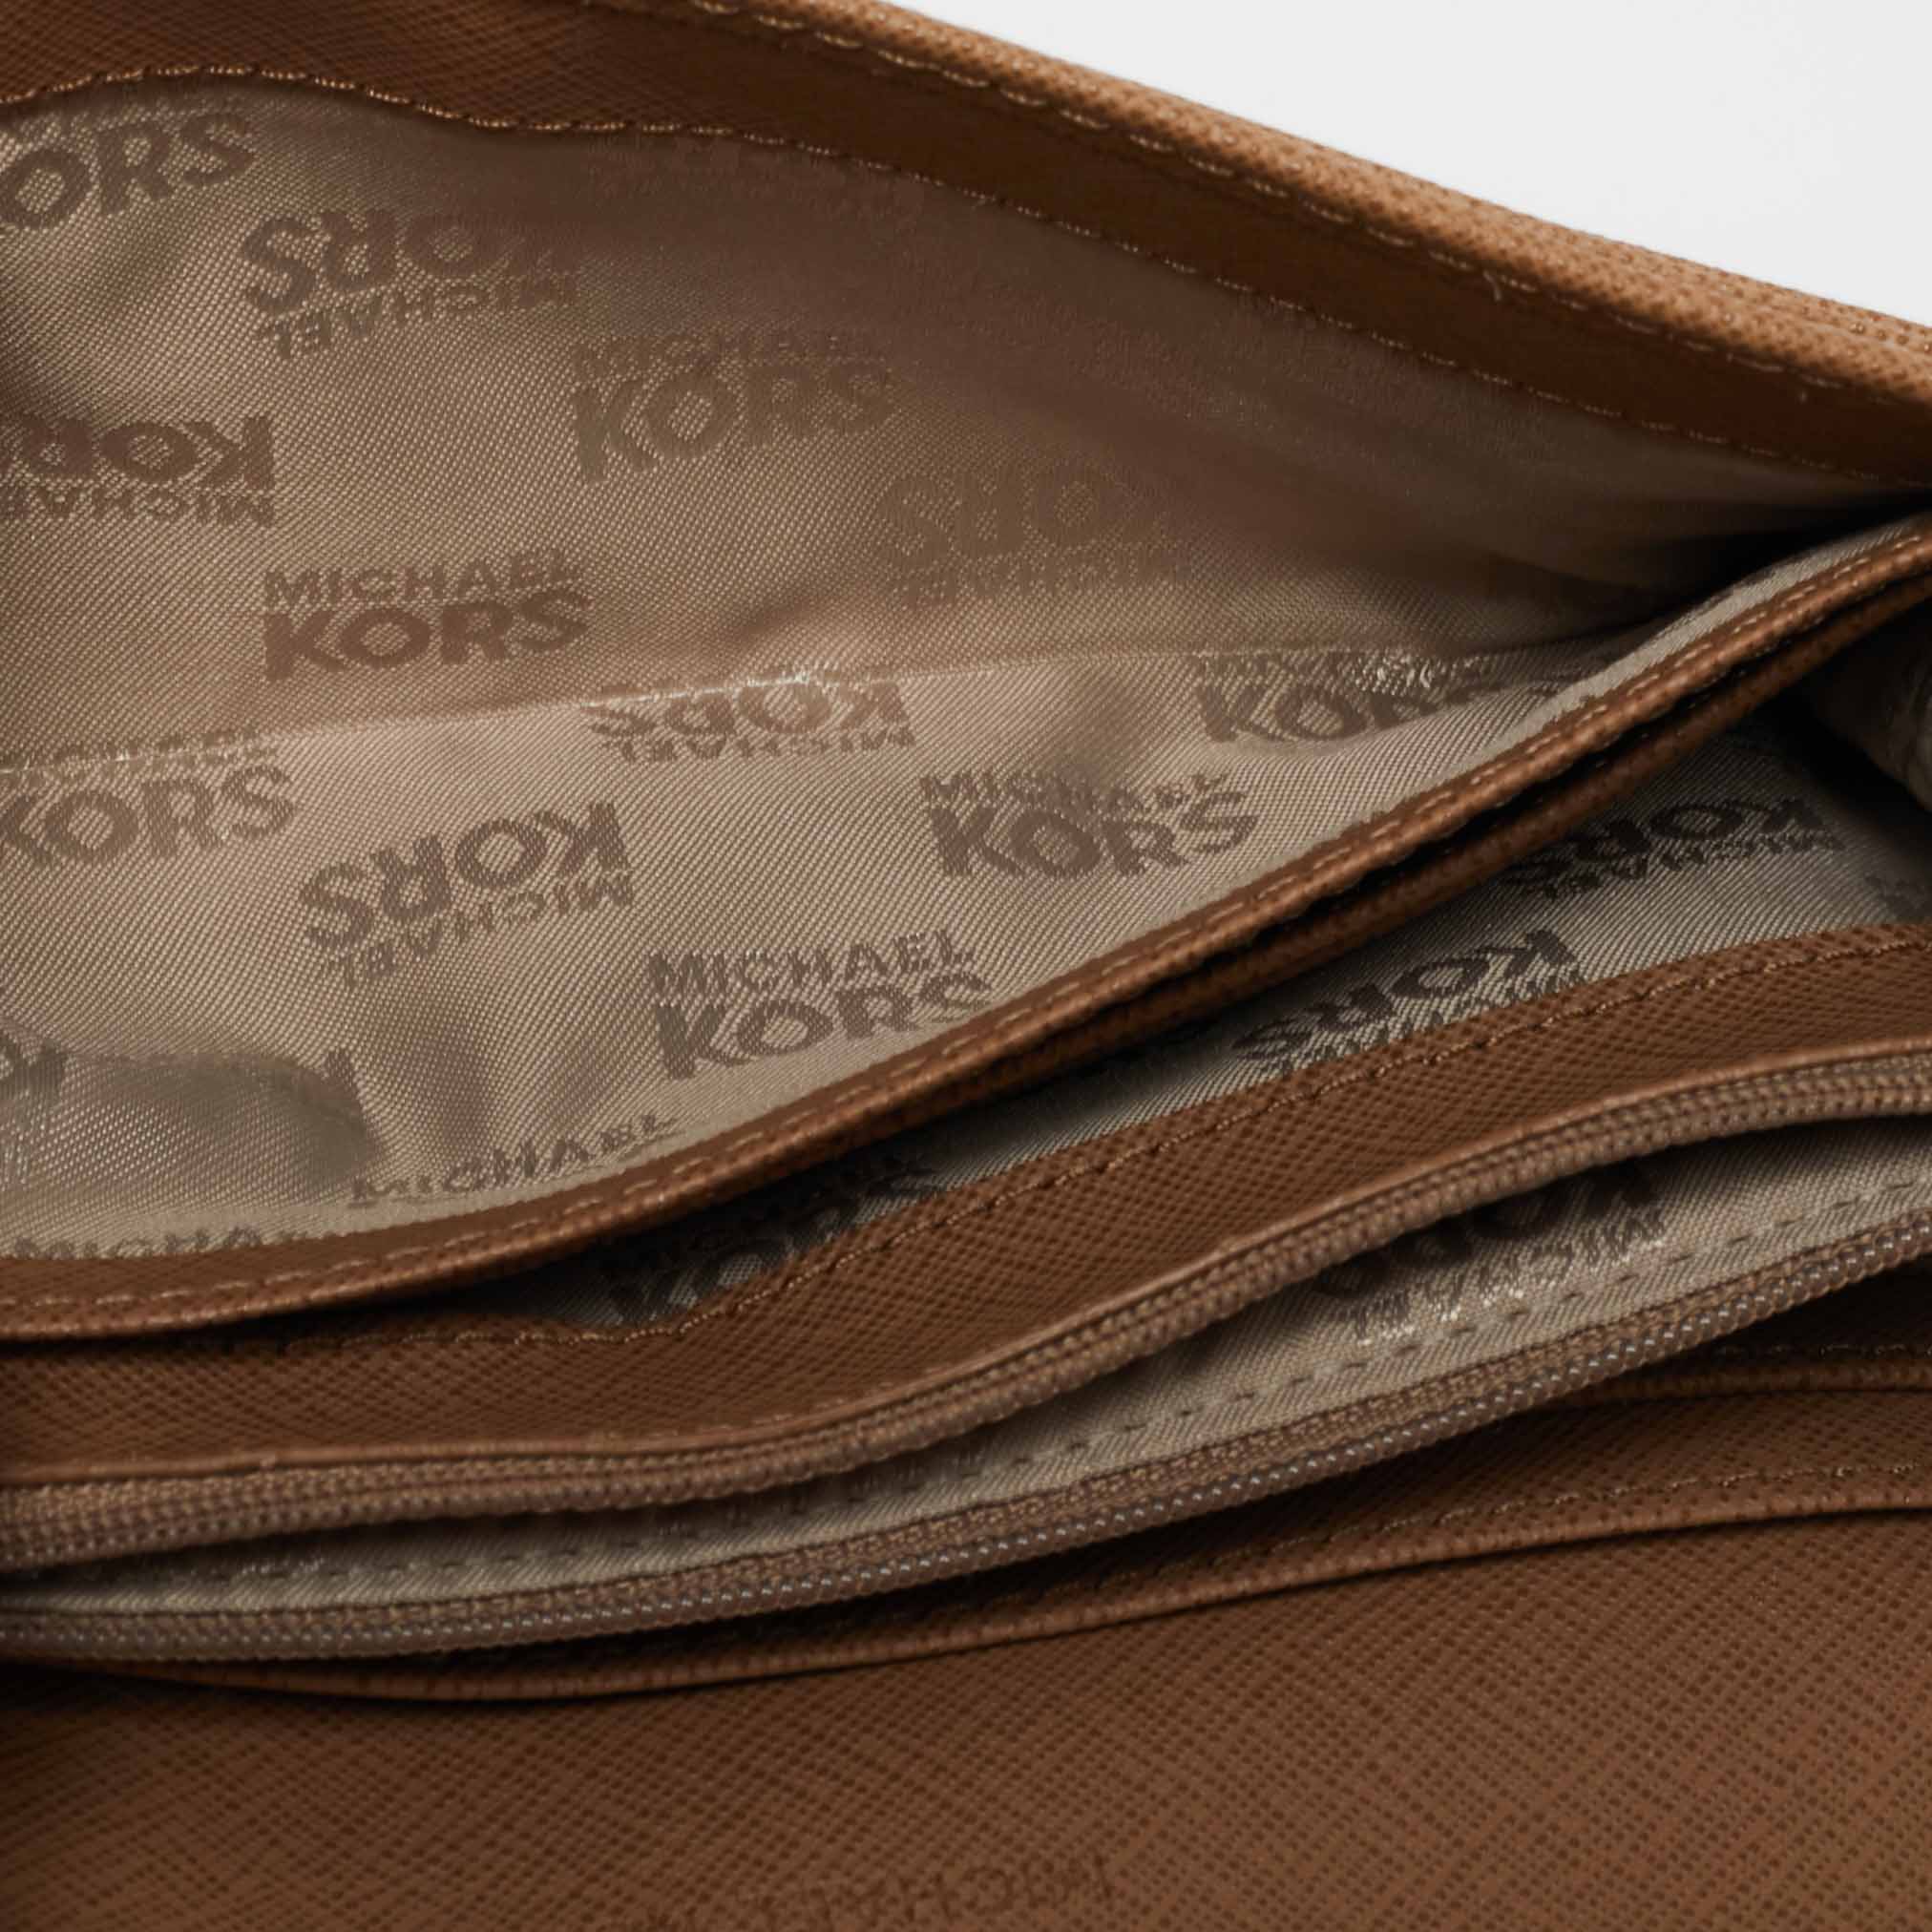 Michael Kors Beige Saffiano Leather Wallet